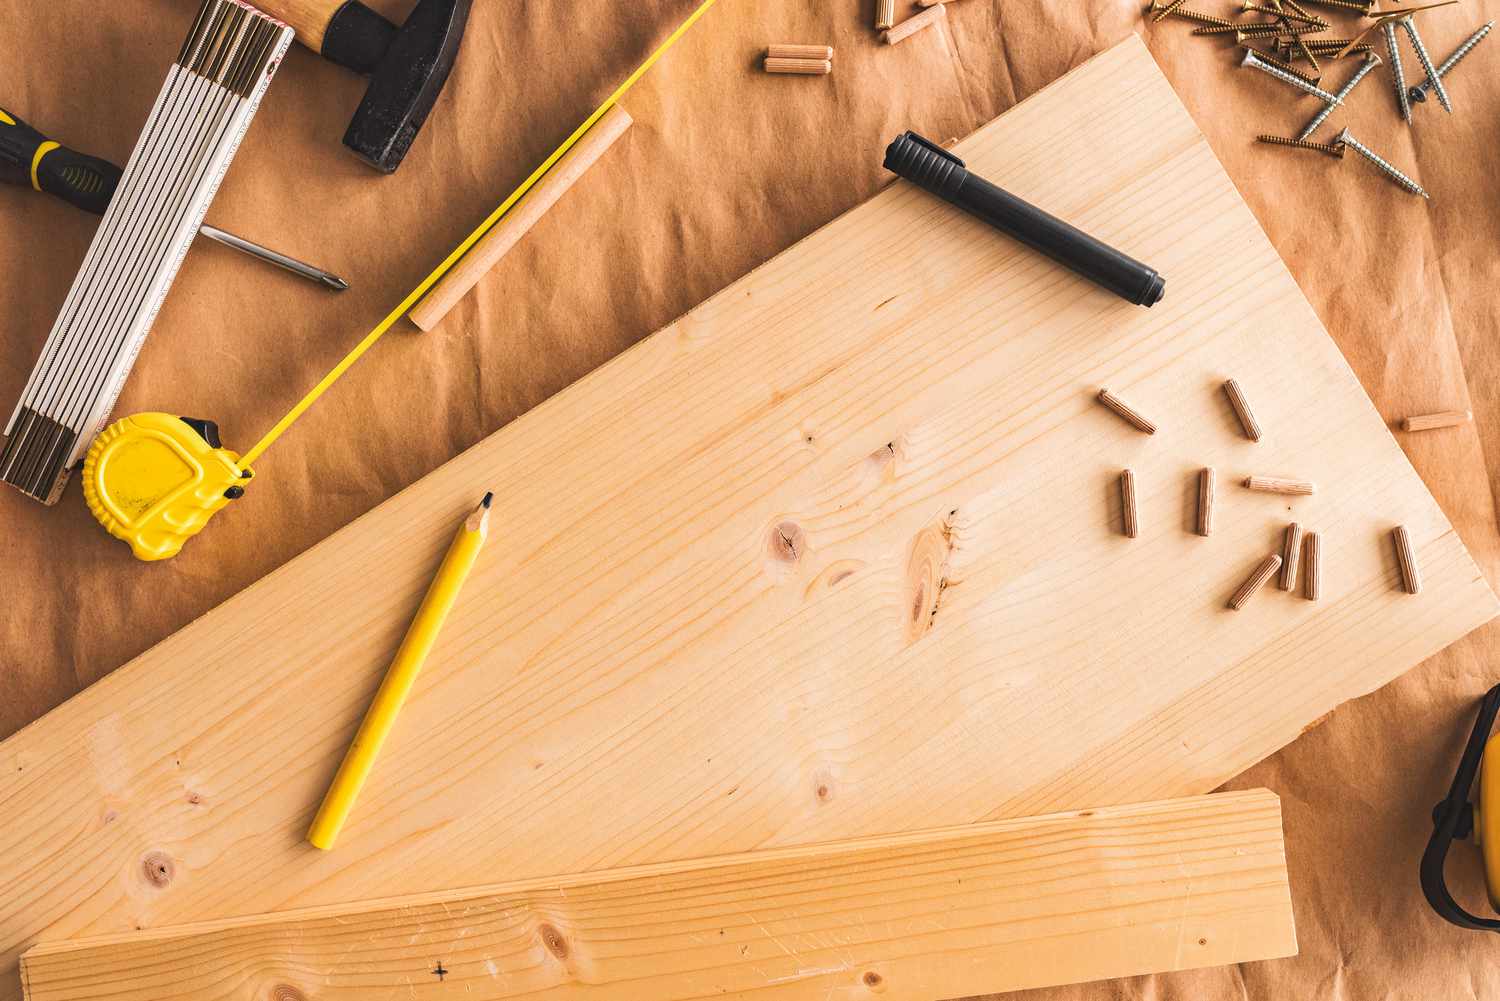 Types of Carpentry Work